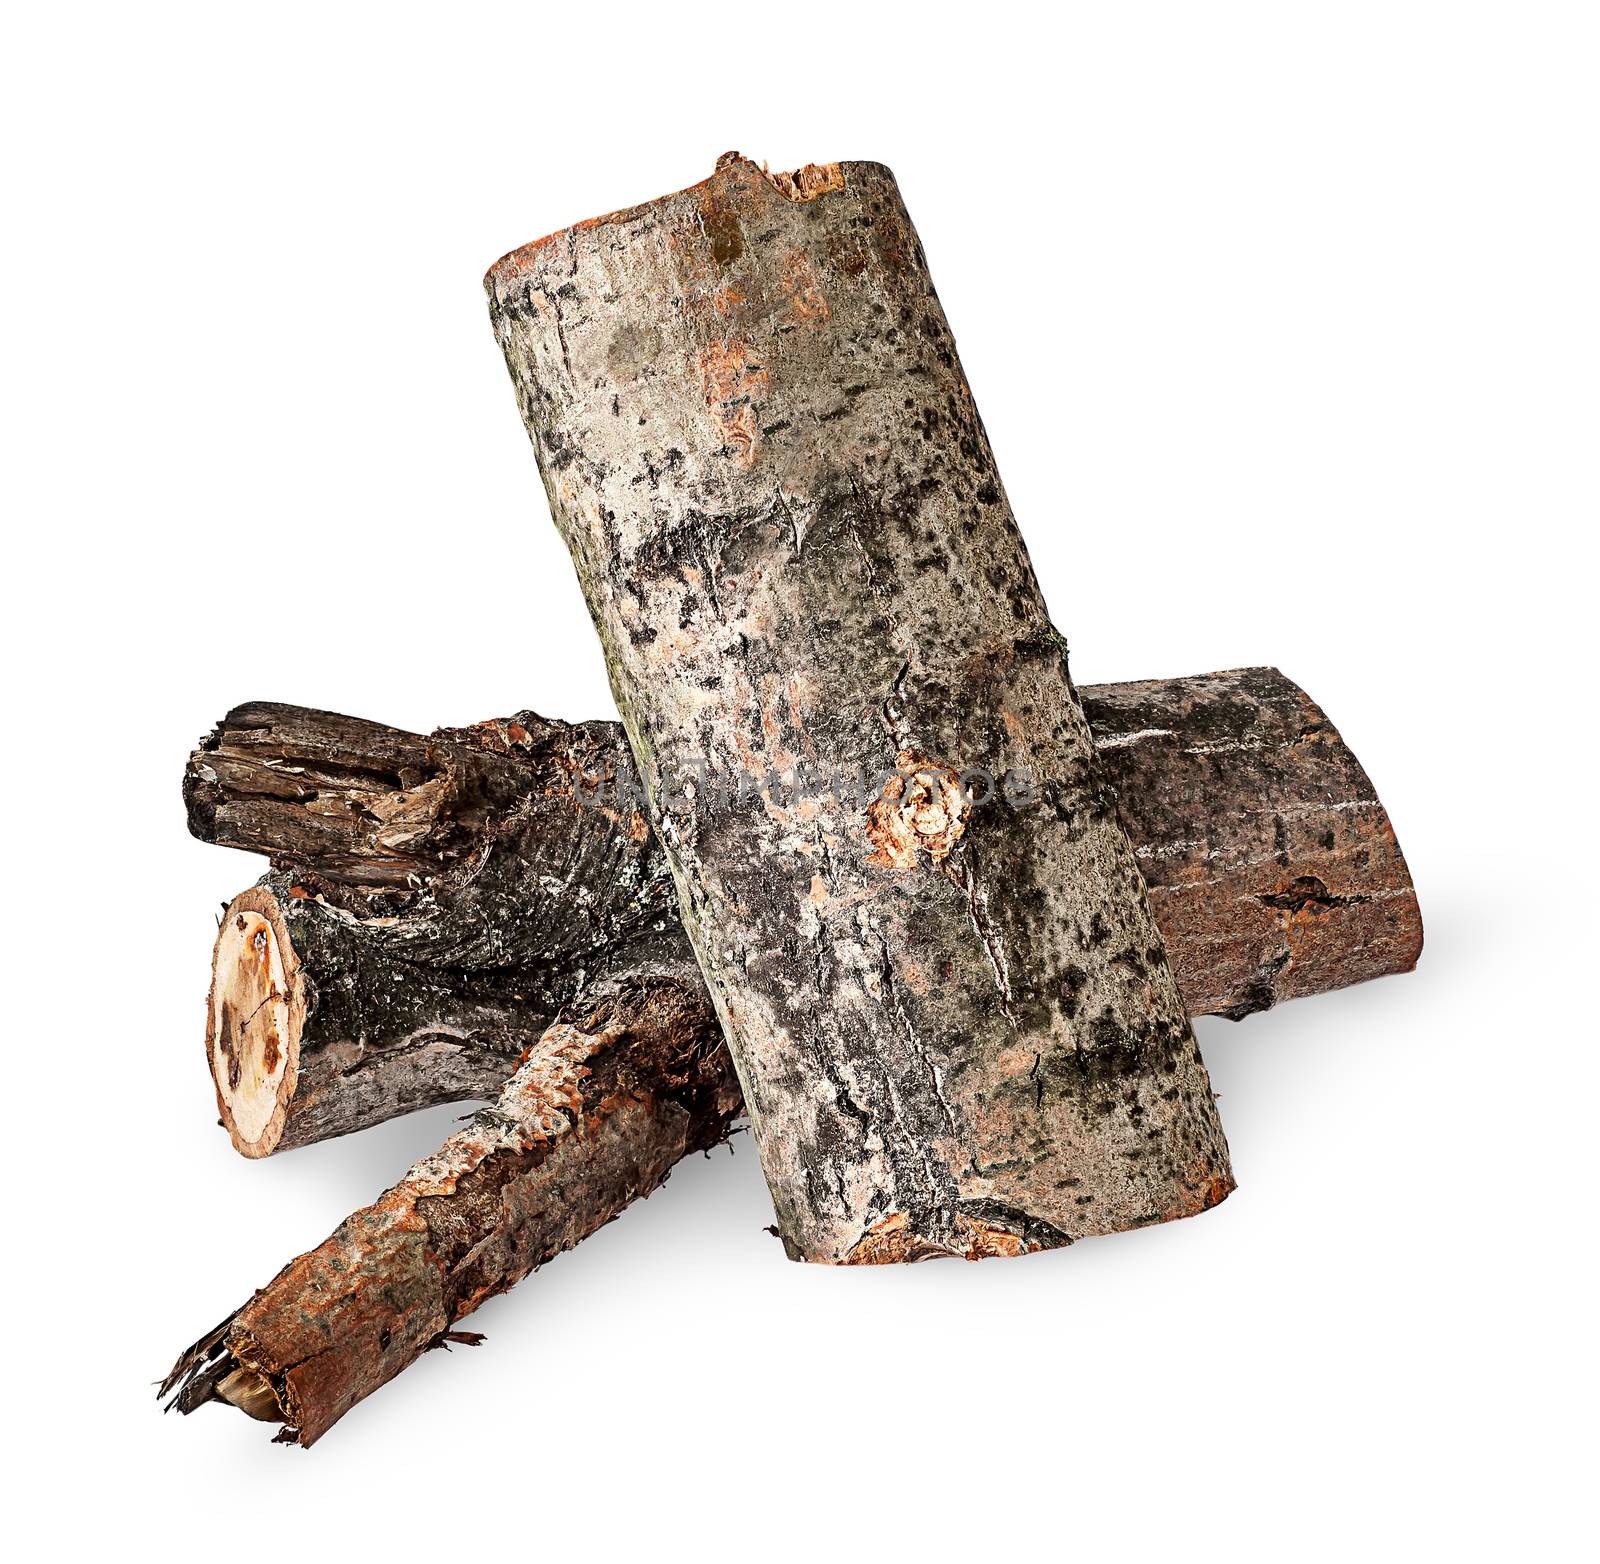 Two poplar logs by Cipariss